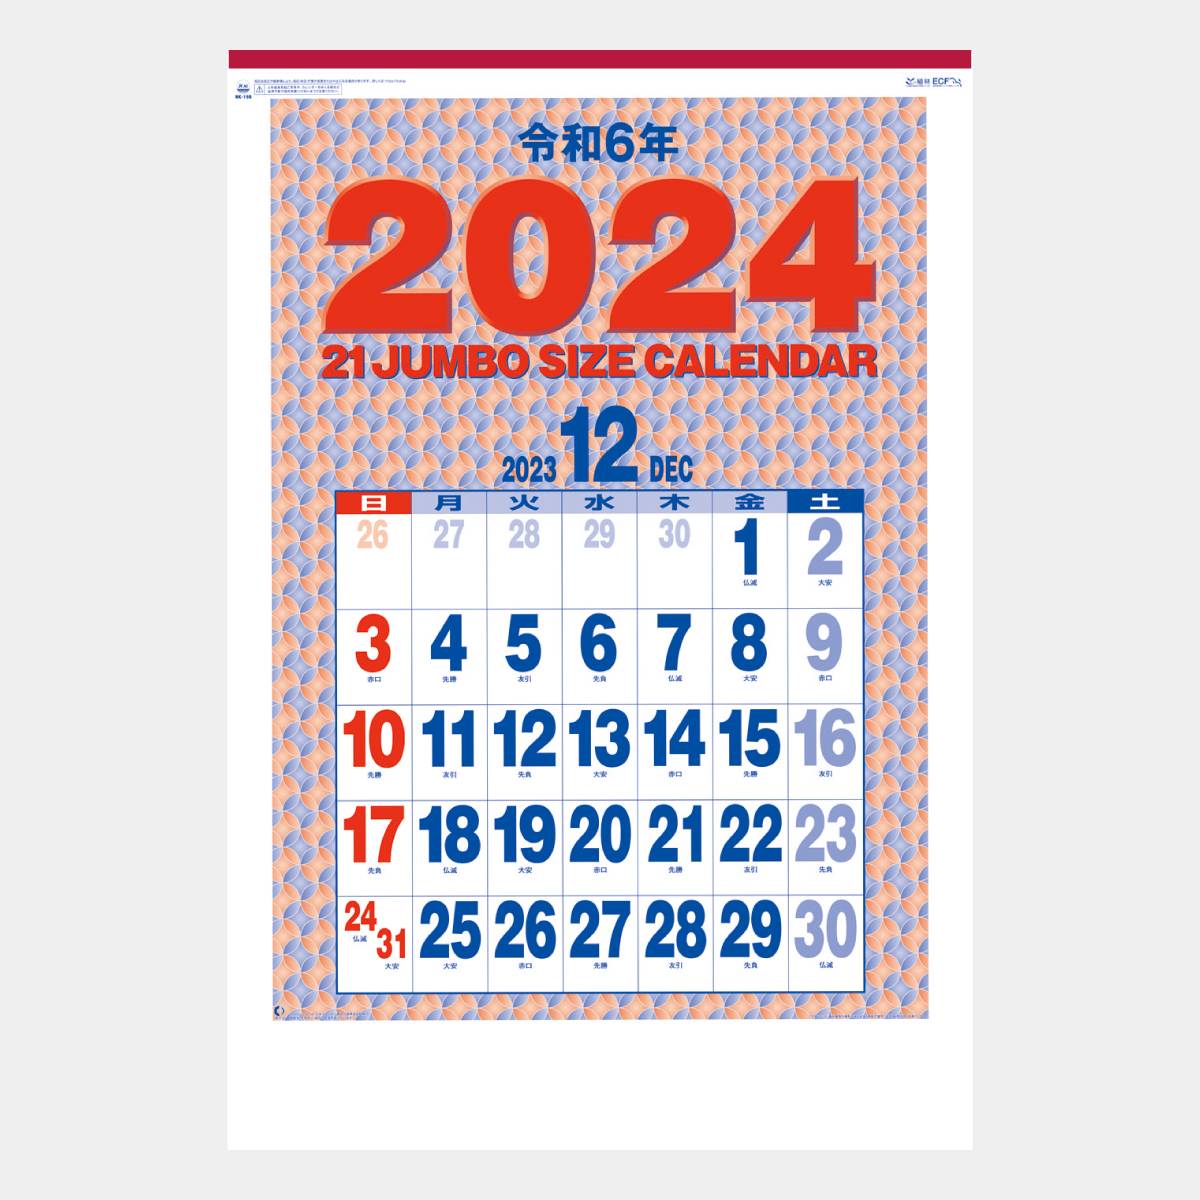 Nk 190 21ジャンボサイズカレンダー 21年版名入れカレンダーを格安で販売 名入れカレンダー印刷 Com